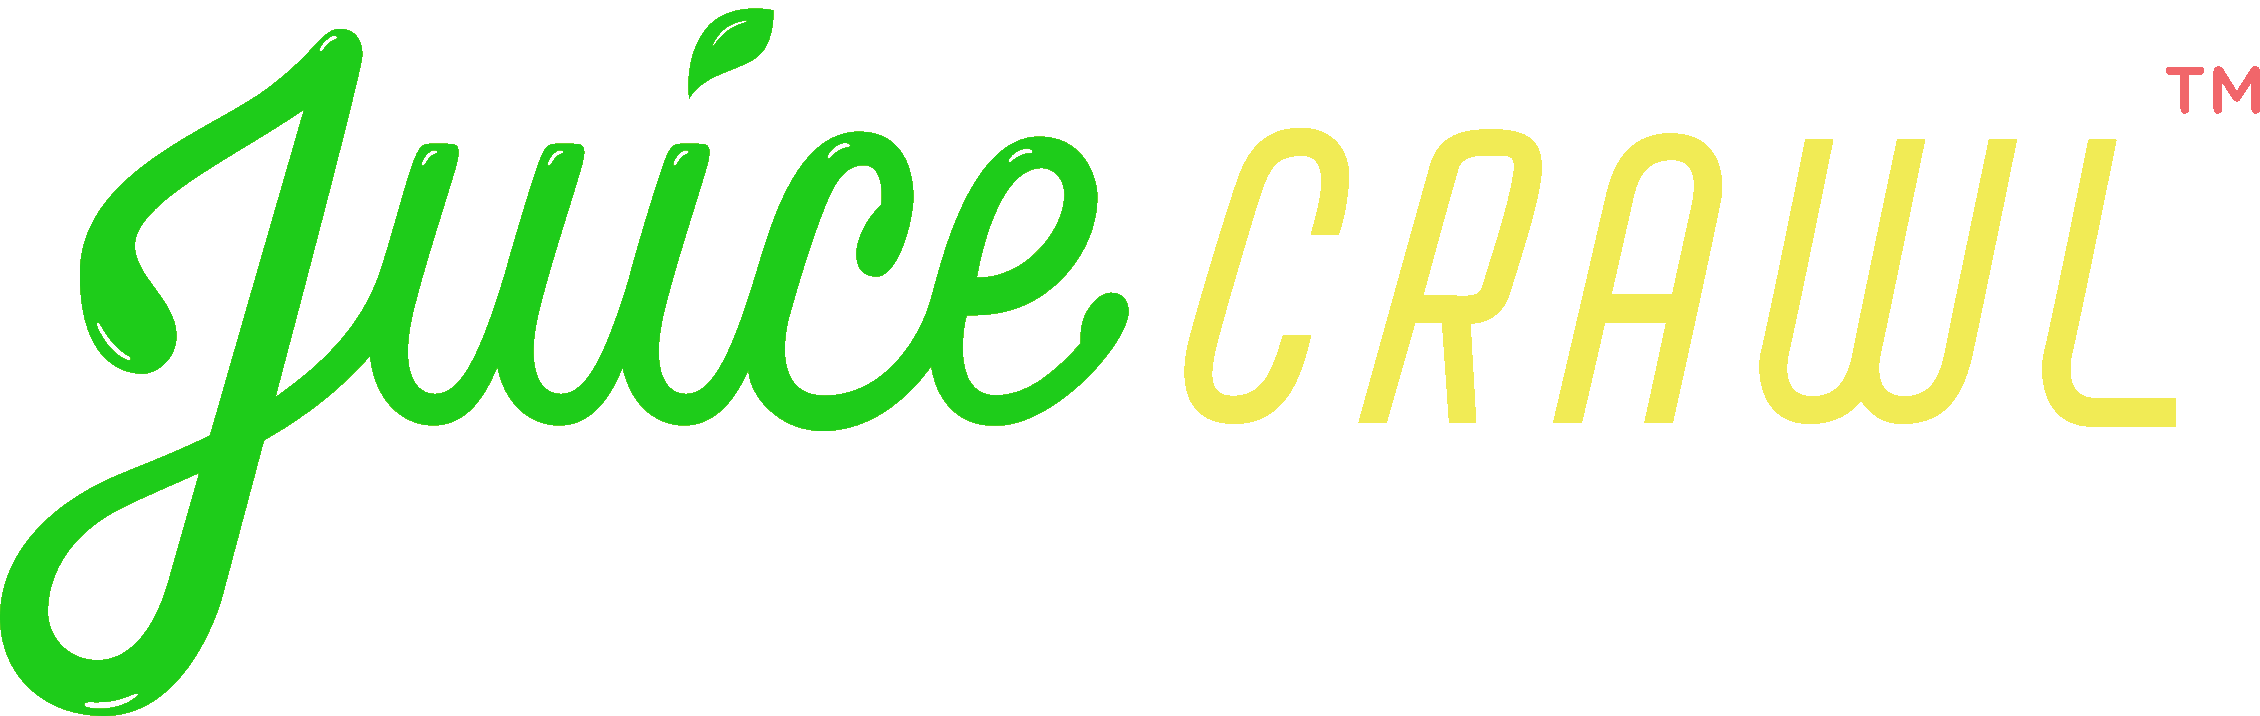 Juice Crawl Logo